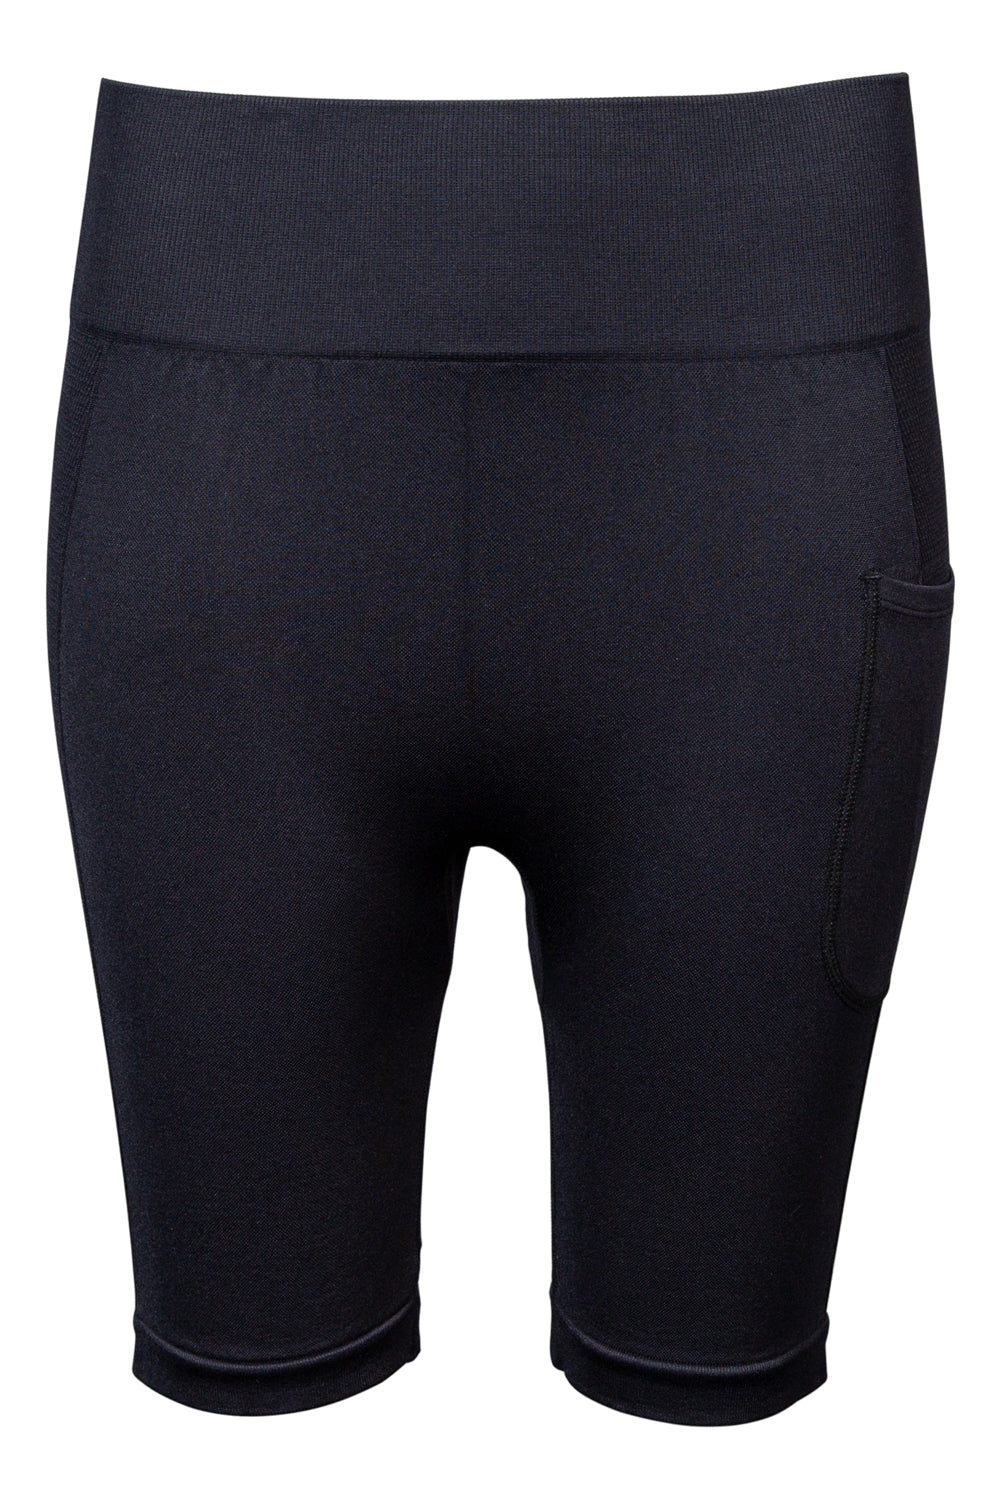 Sundried Women's Seamless Cycling Shorts Shorts L Black SD0361 L Black Activewear